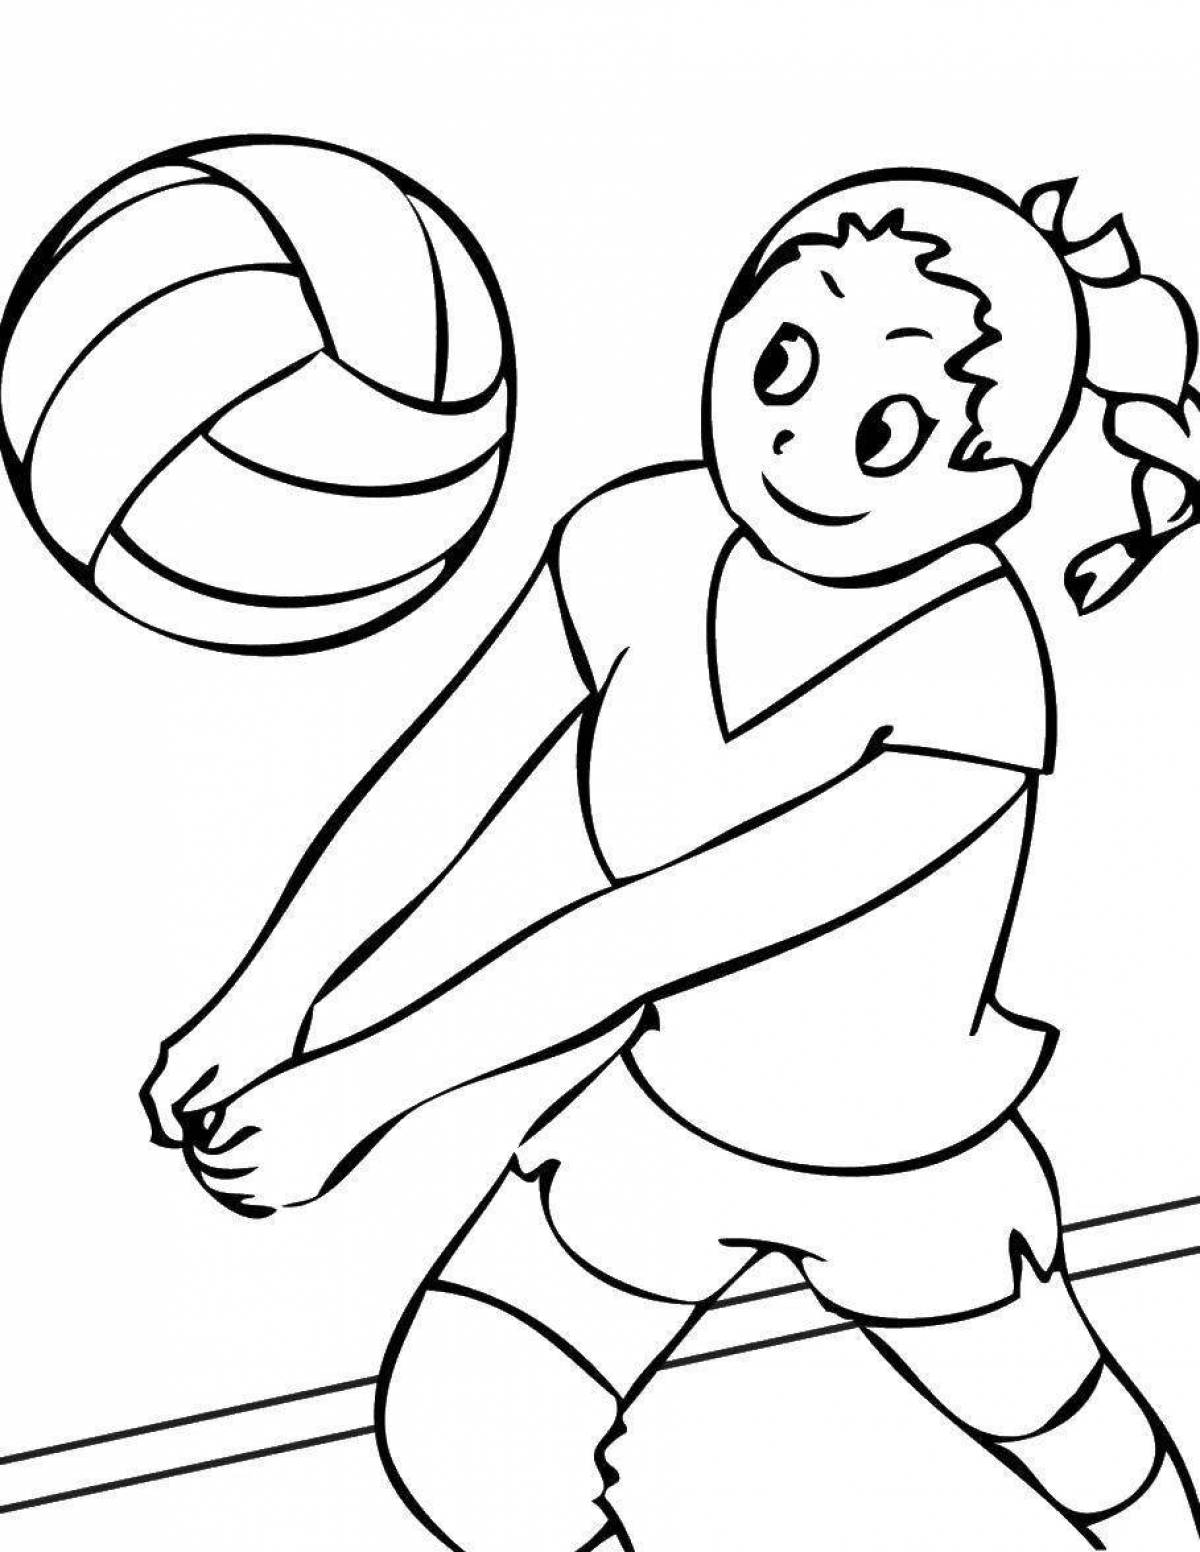 Coloring page kick volleyball